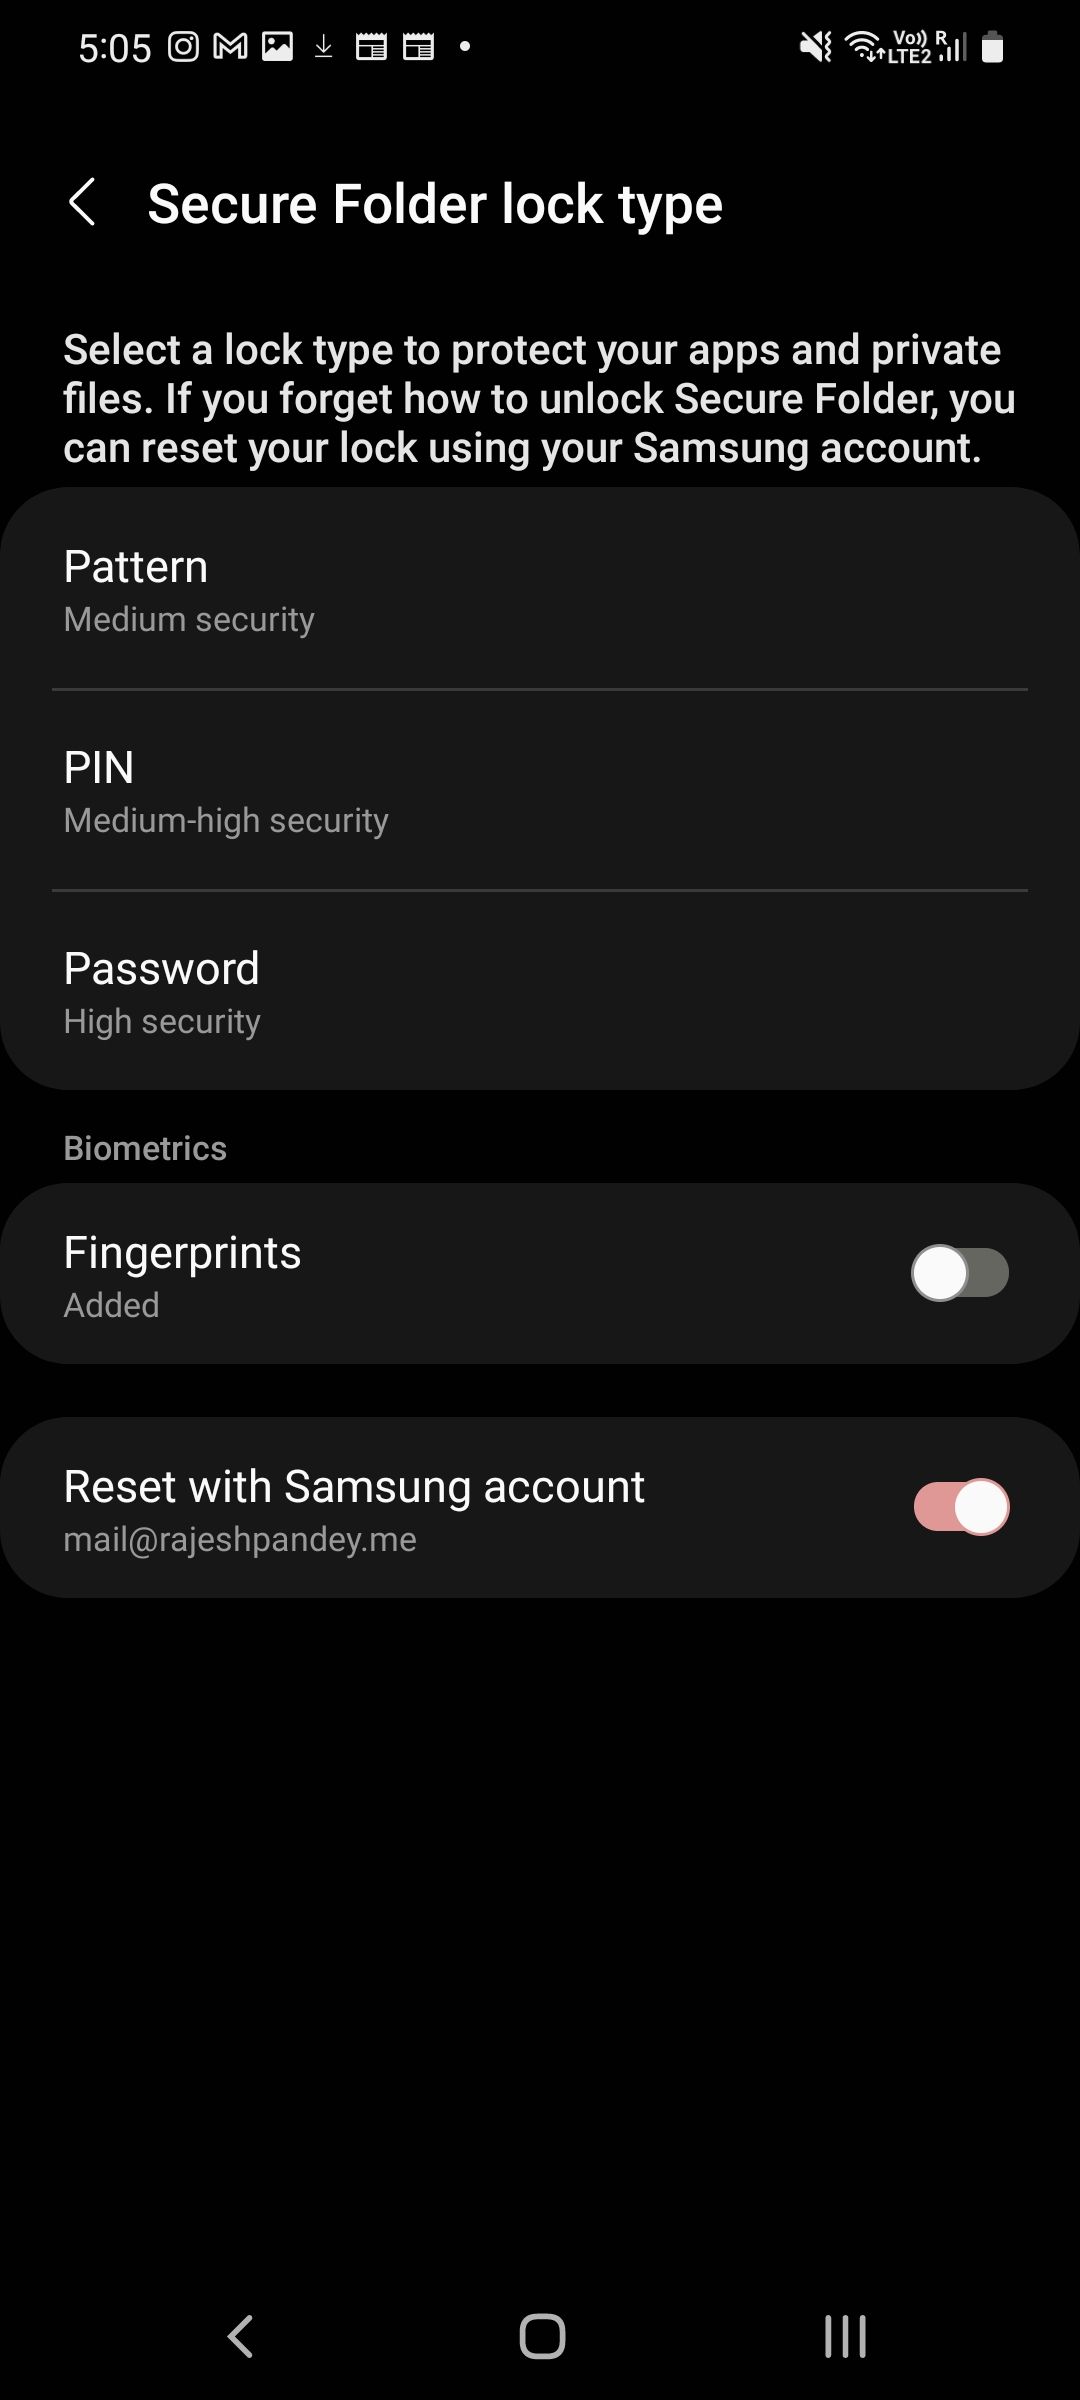 The "Secure Folder lock type" settings in Samsung Gallery